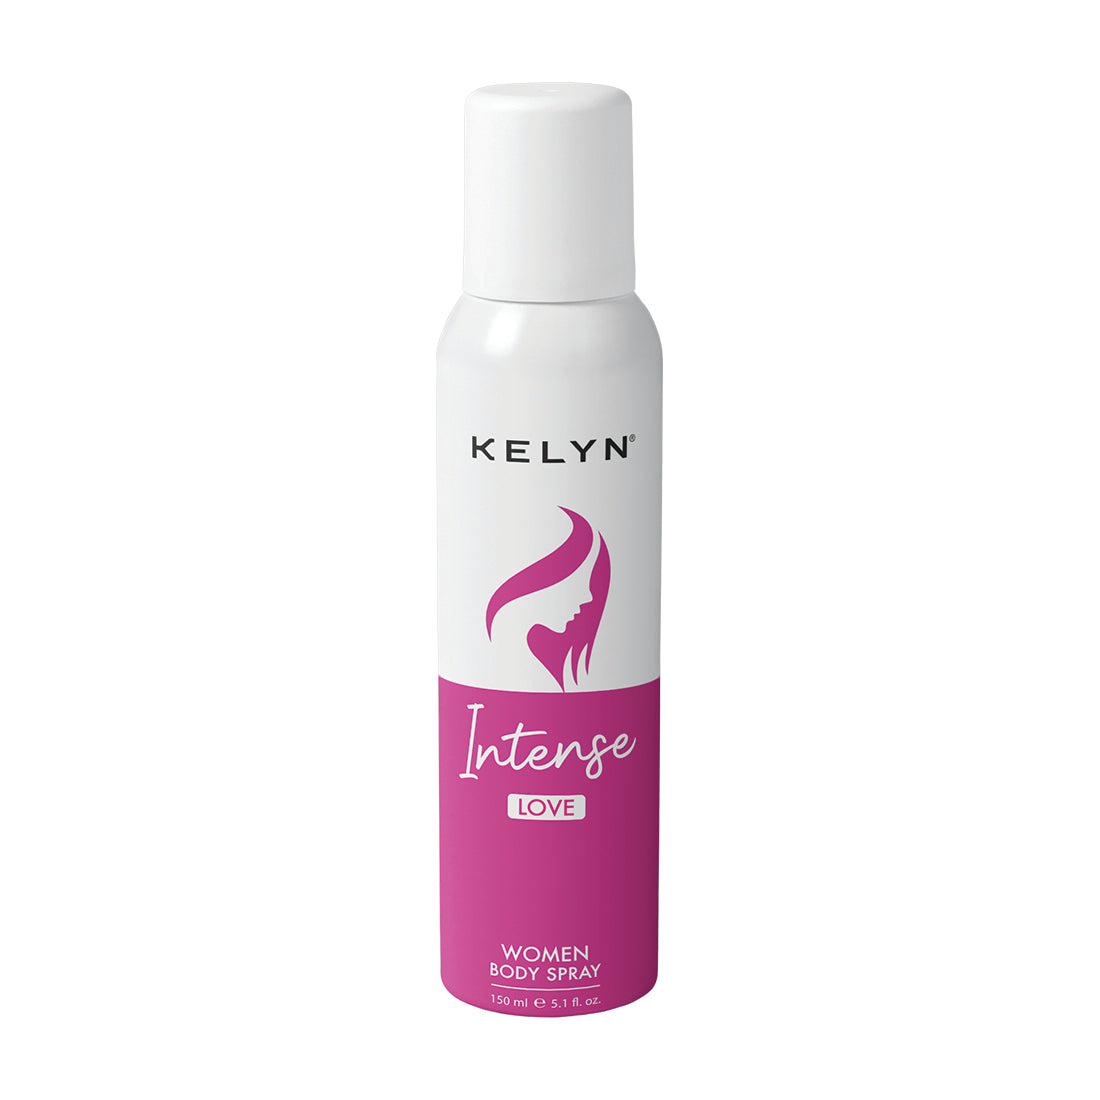 Intense Love Deodorant for Women Body Spray, 150 ml